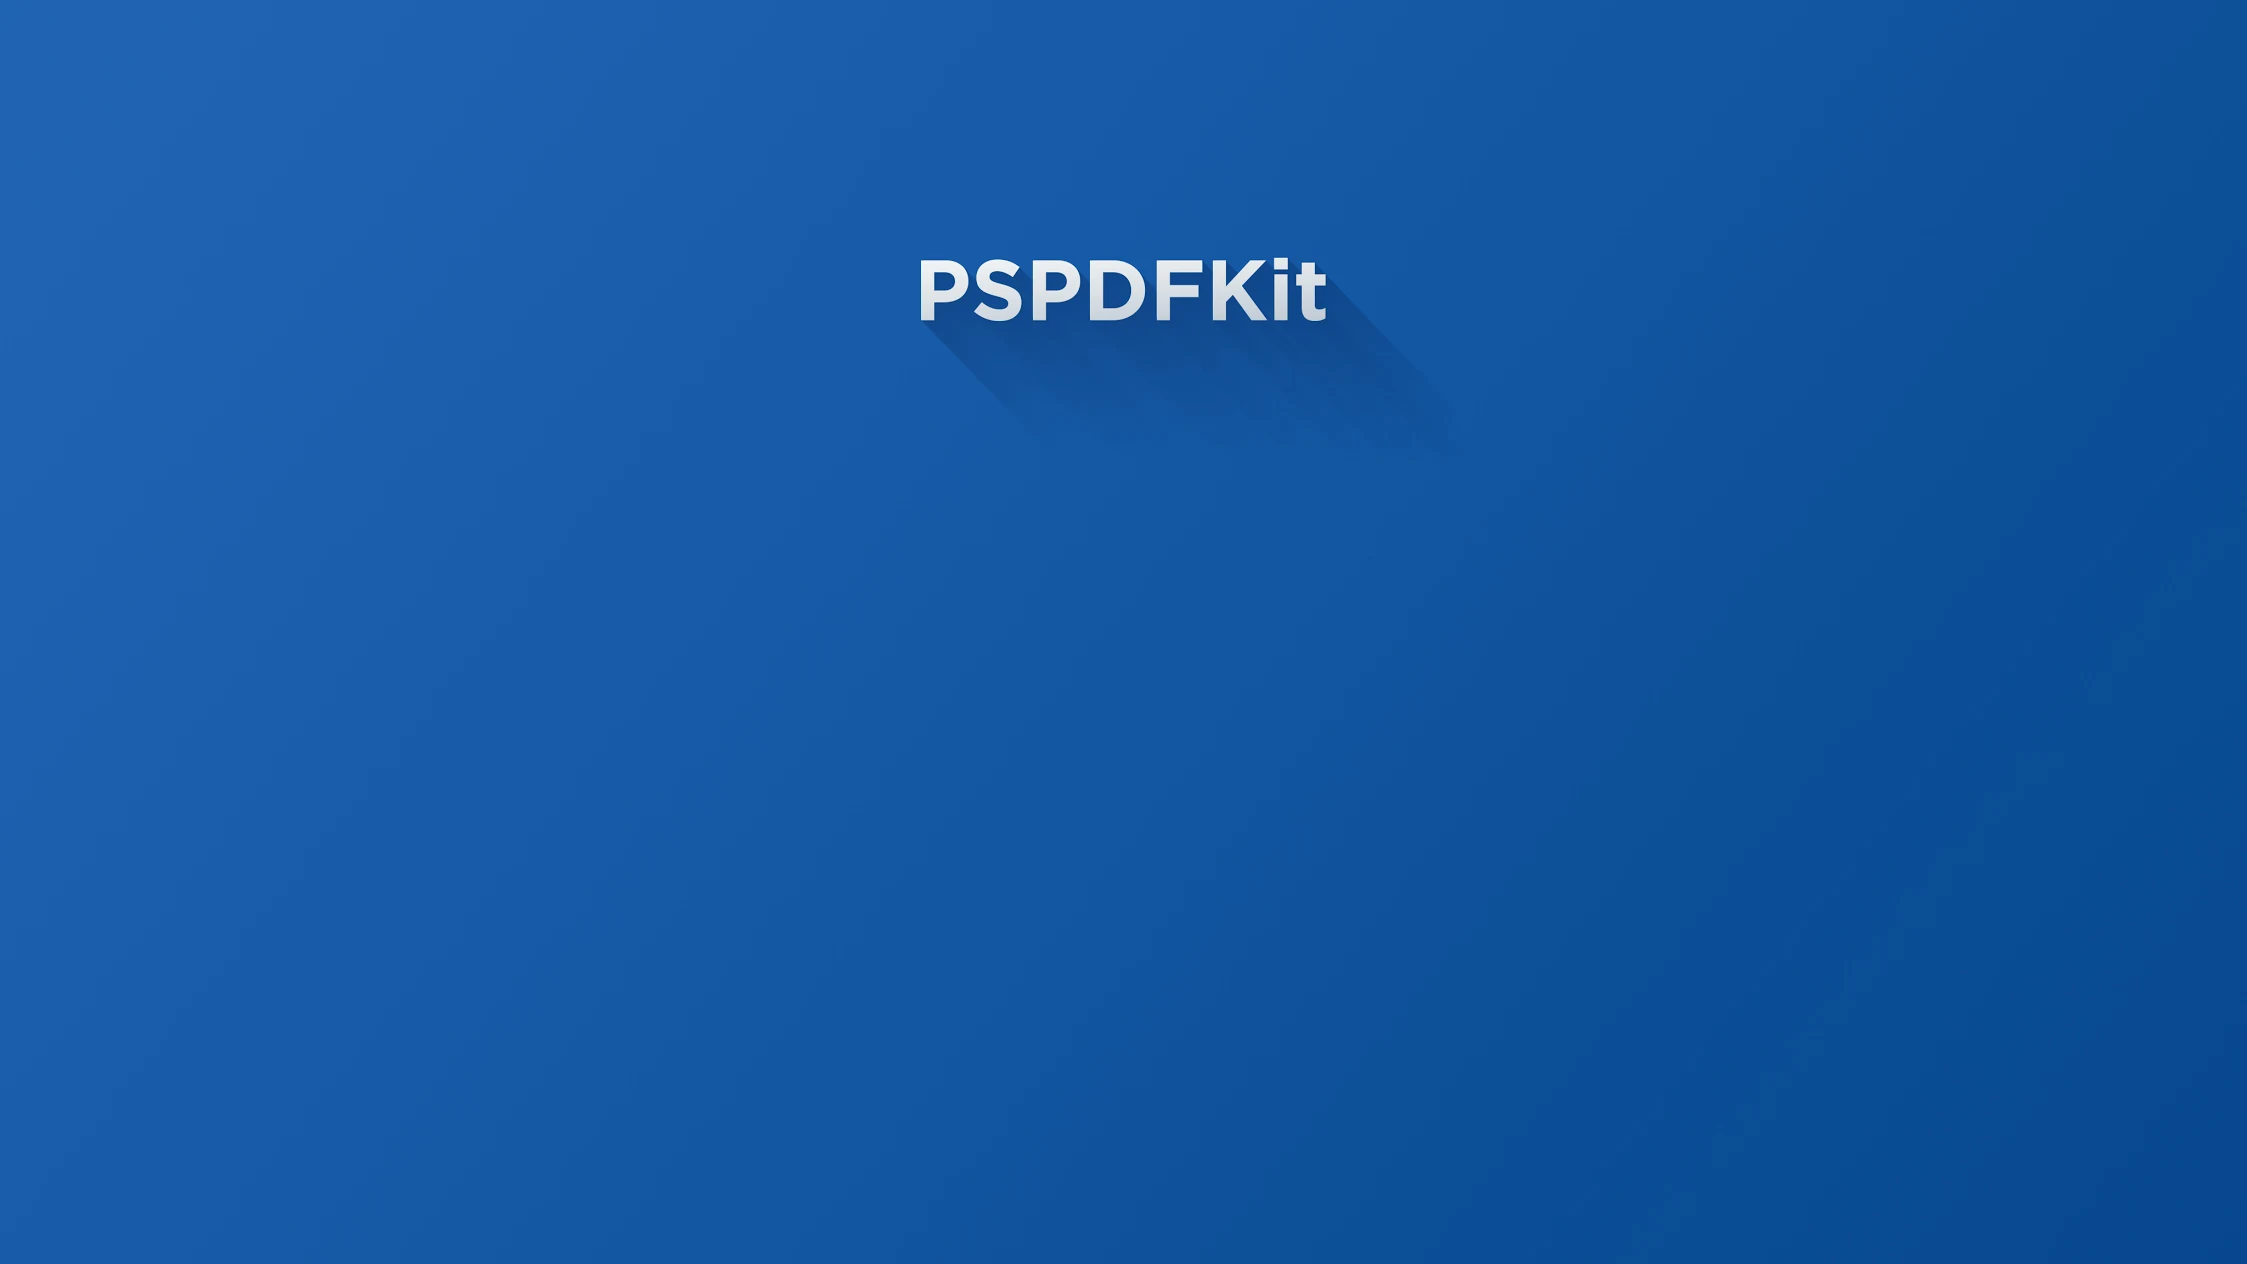 PSPDFKit GmbH